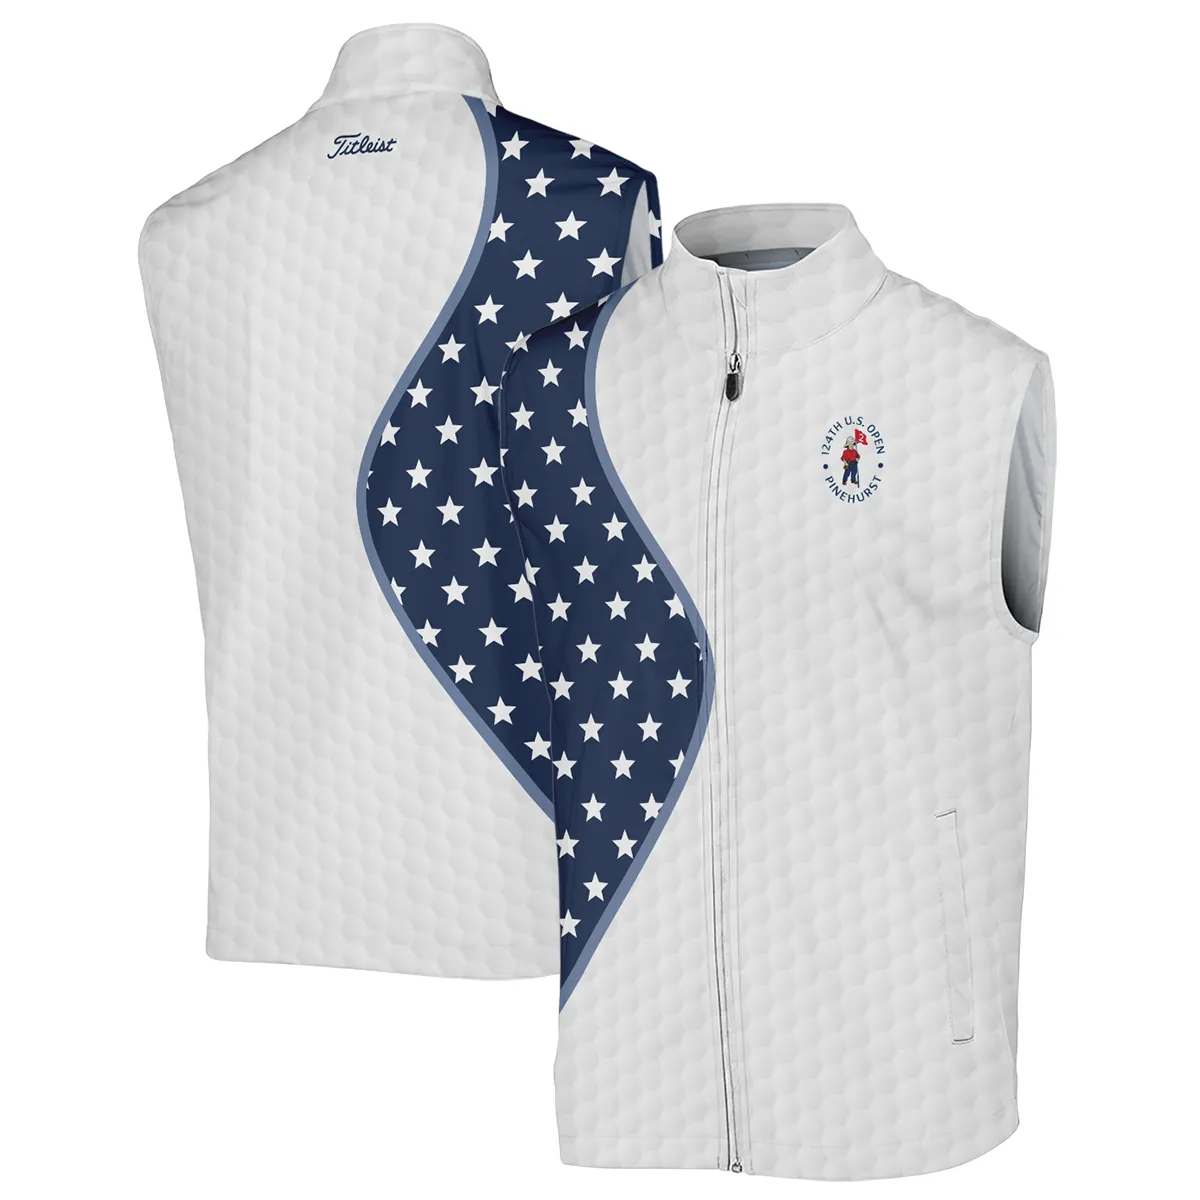 Golf Pattern Light Blue Cup 124th U.S. Open Pinehurst Titleist Style Classic, Short Sleeve Round Neck Polo Shirt